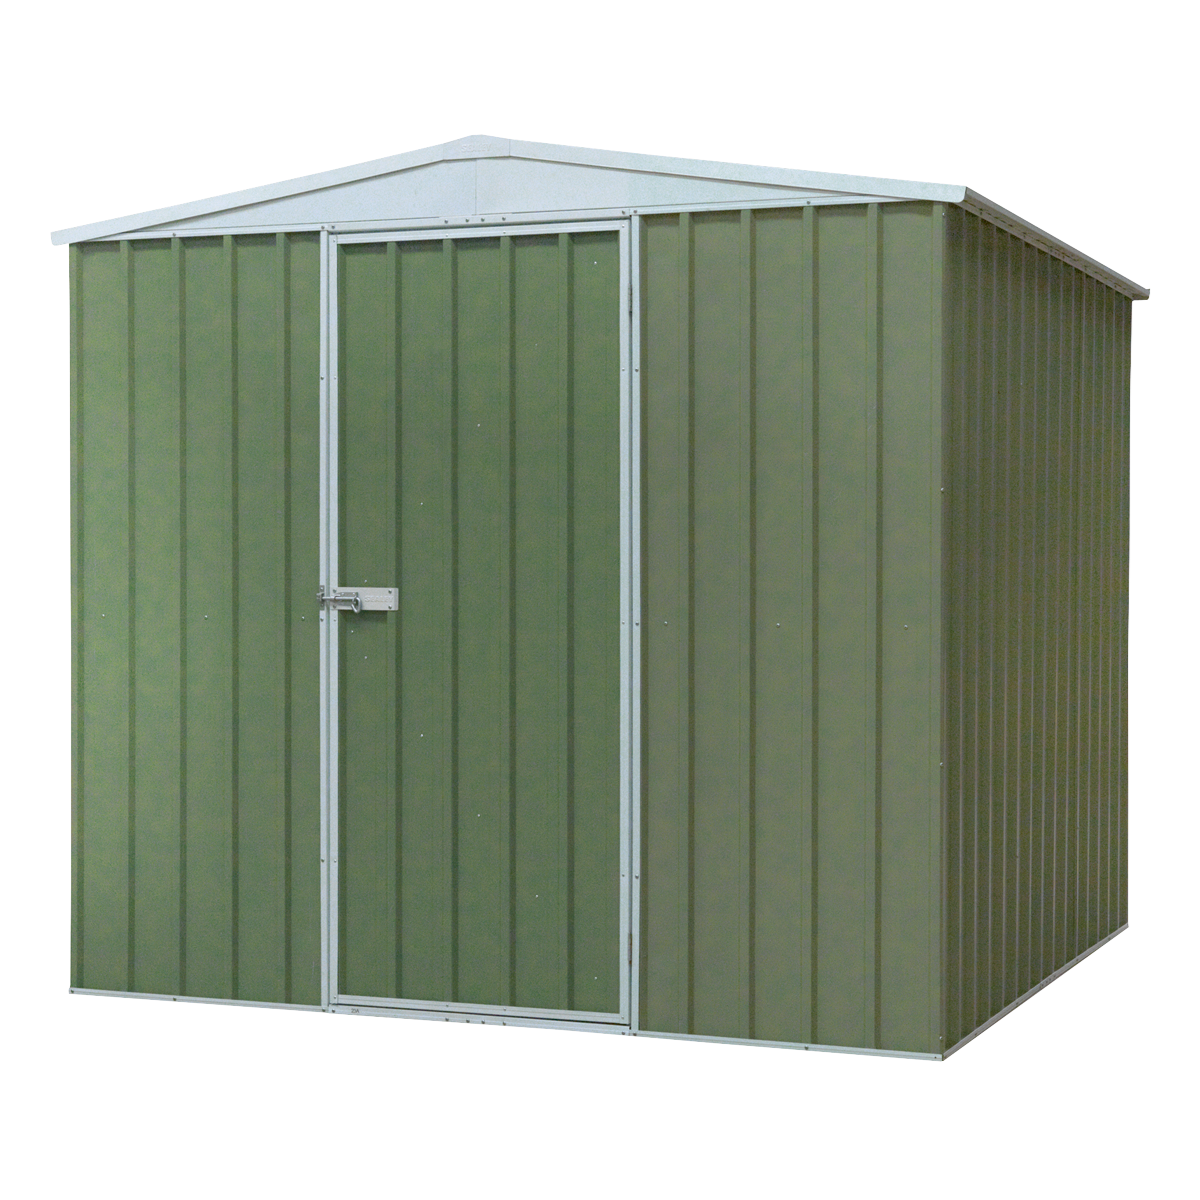 Dellonda Galvanised Steel Metal Garden/Outdoor/Storage Shed, 7.5FT x 7.5FT, Apex Style Roof - Green - DG115